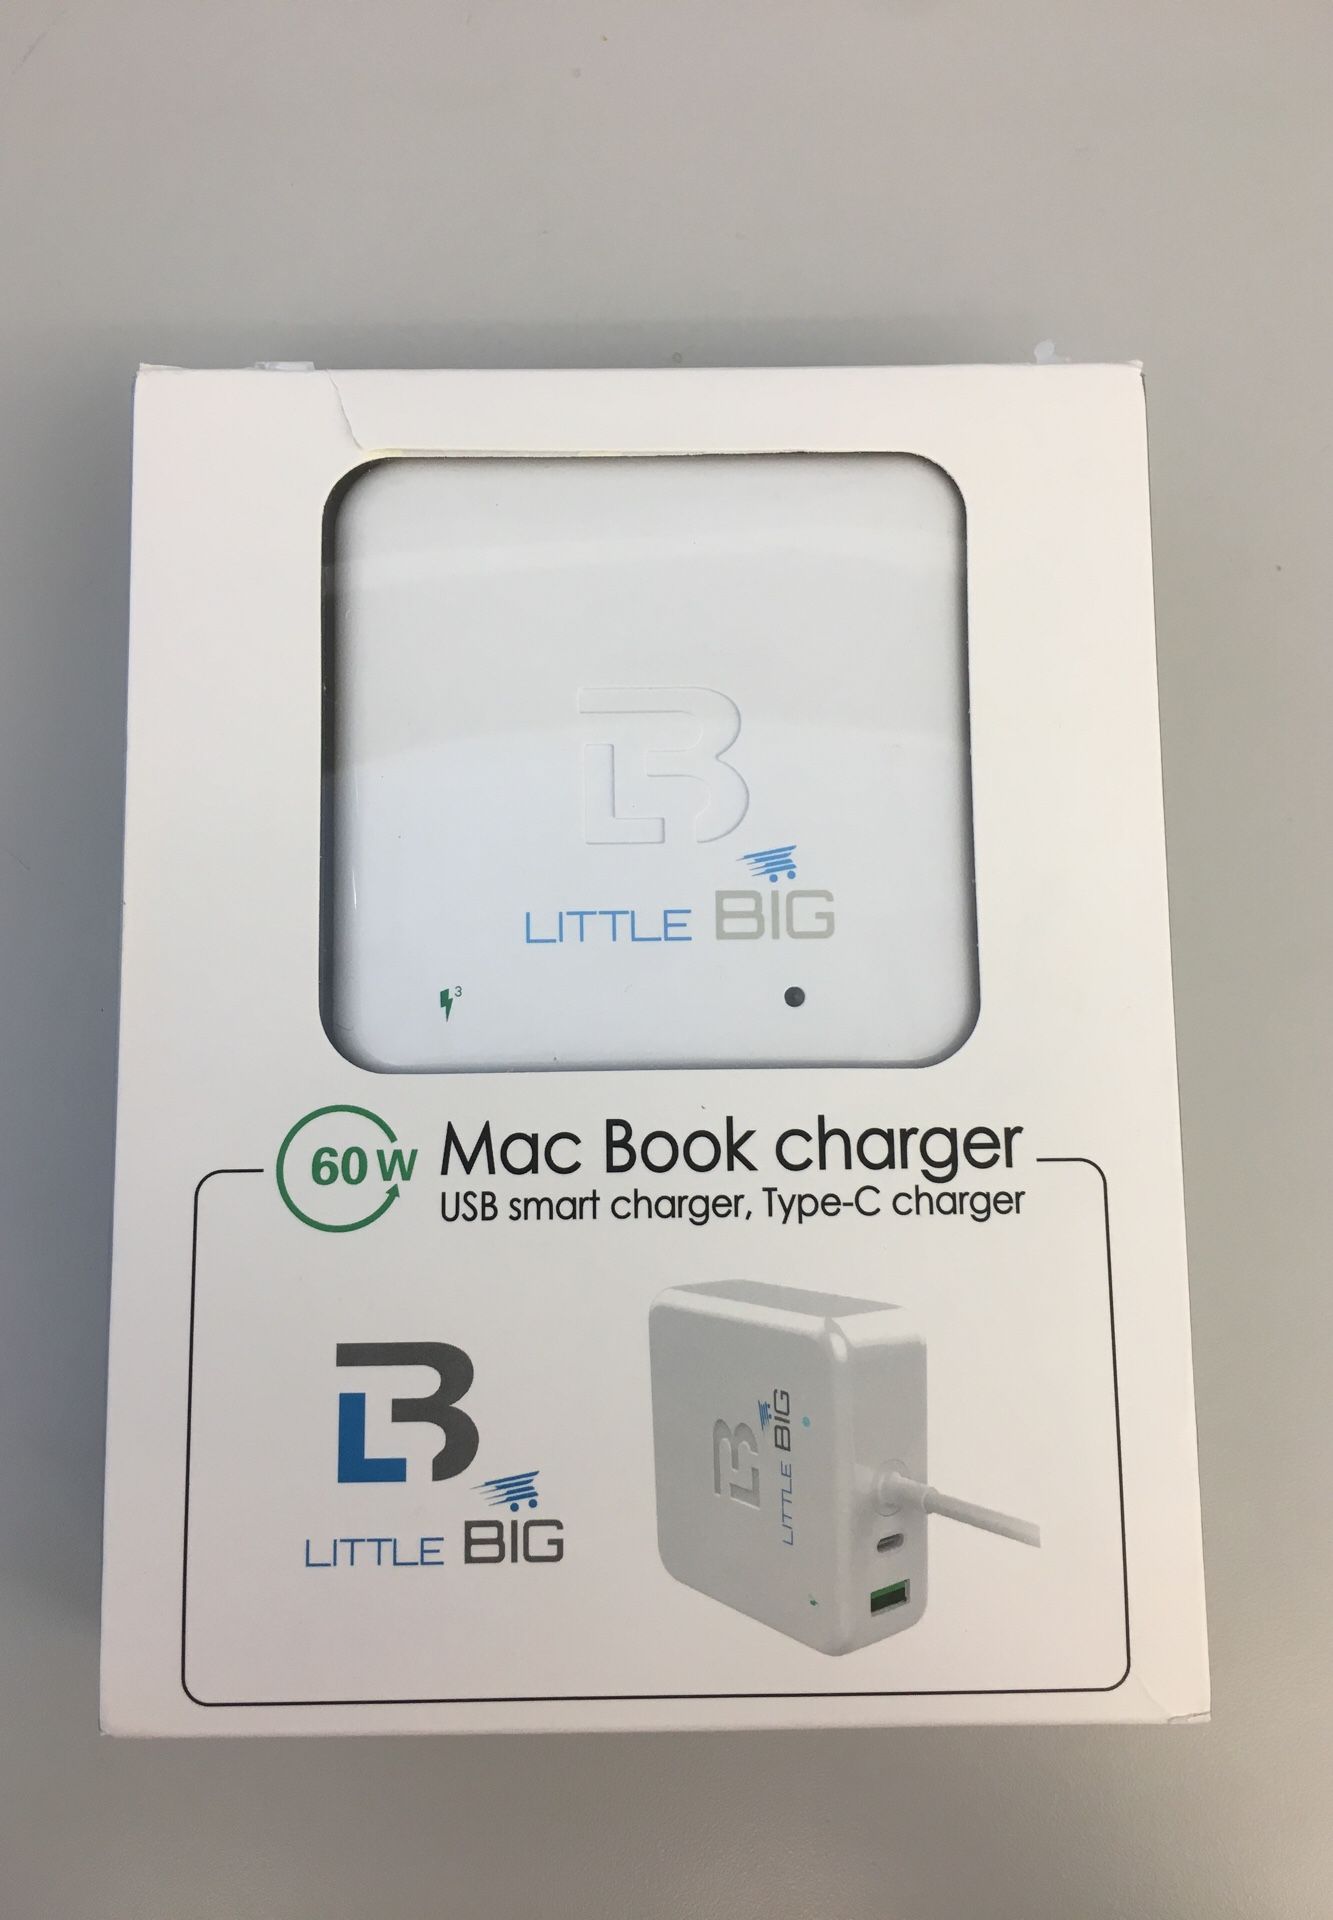 MacBook charger type C